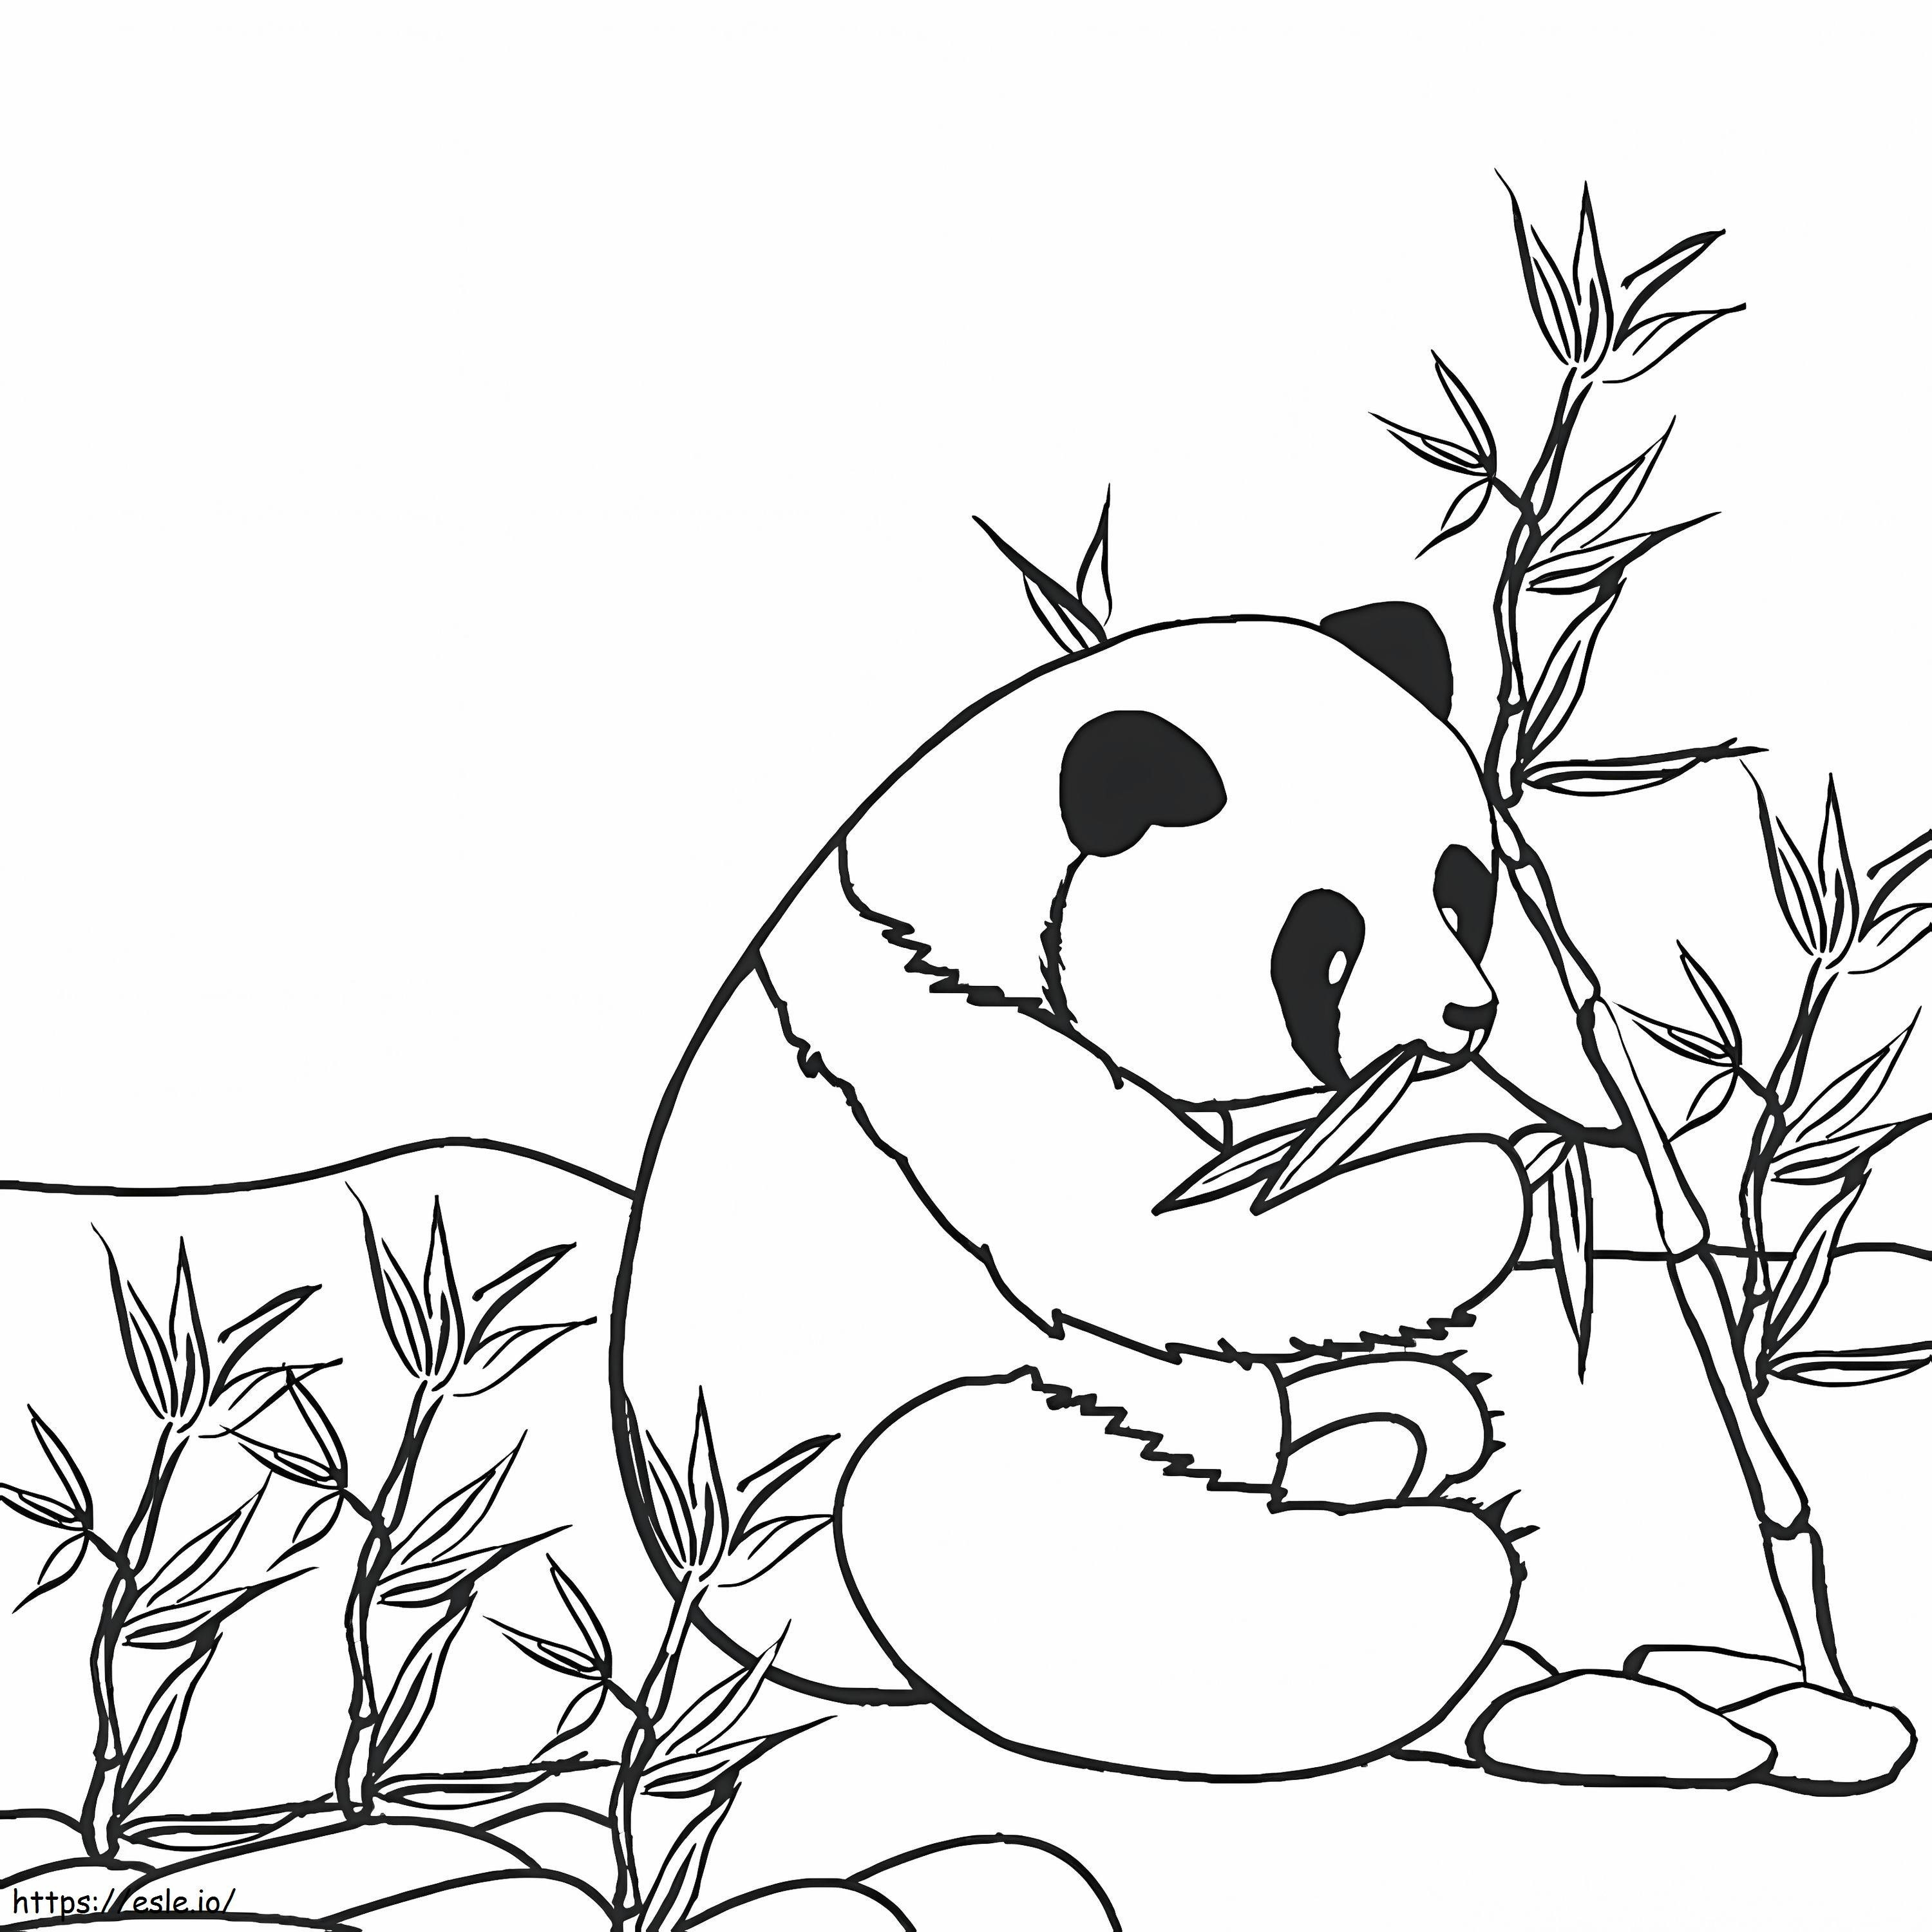 Coloriage Panda mange du bambou à imprimer dessin